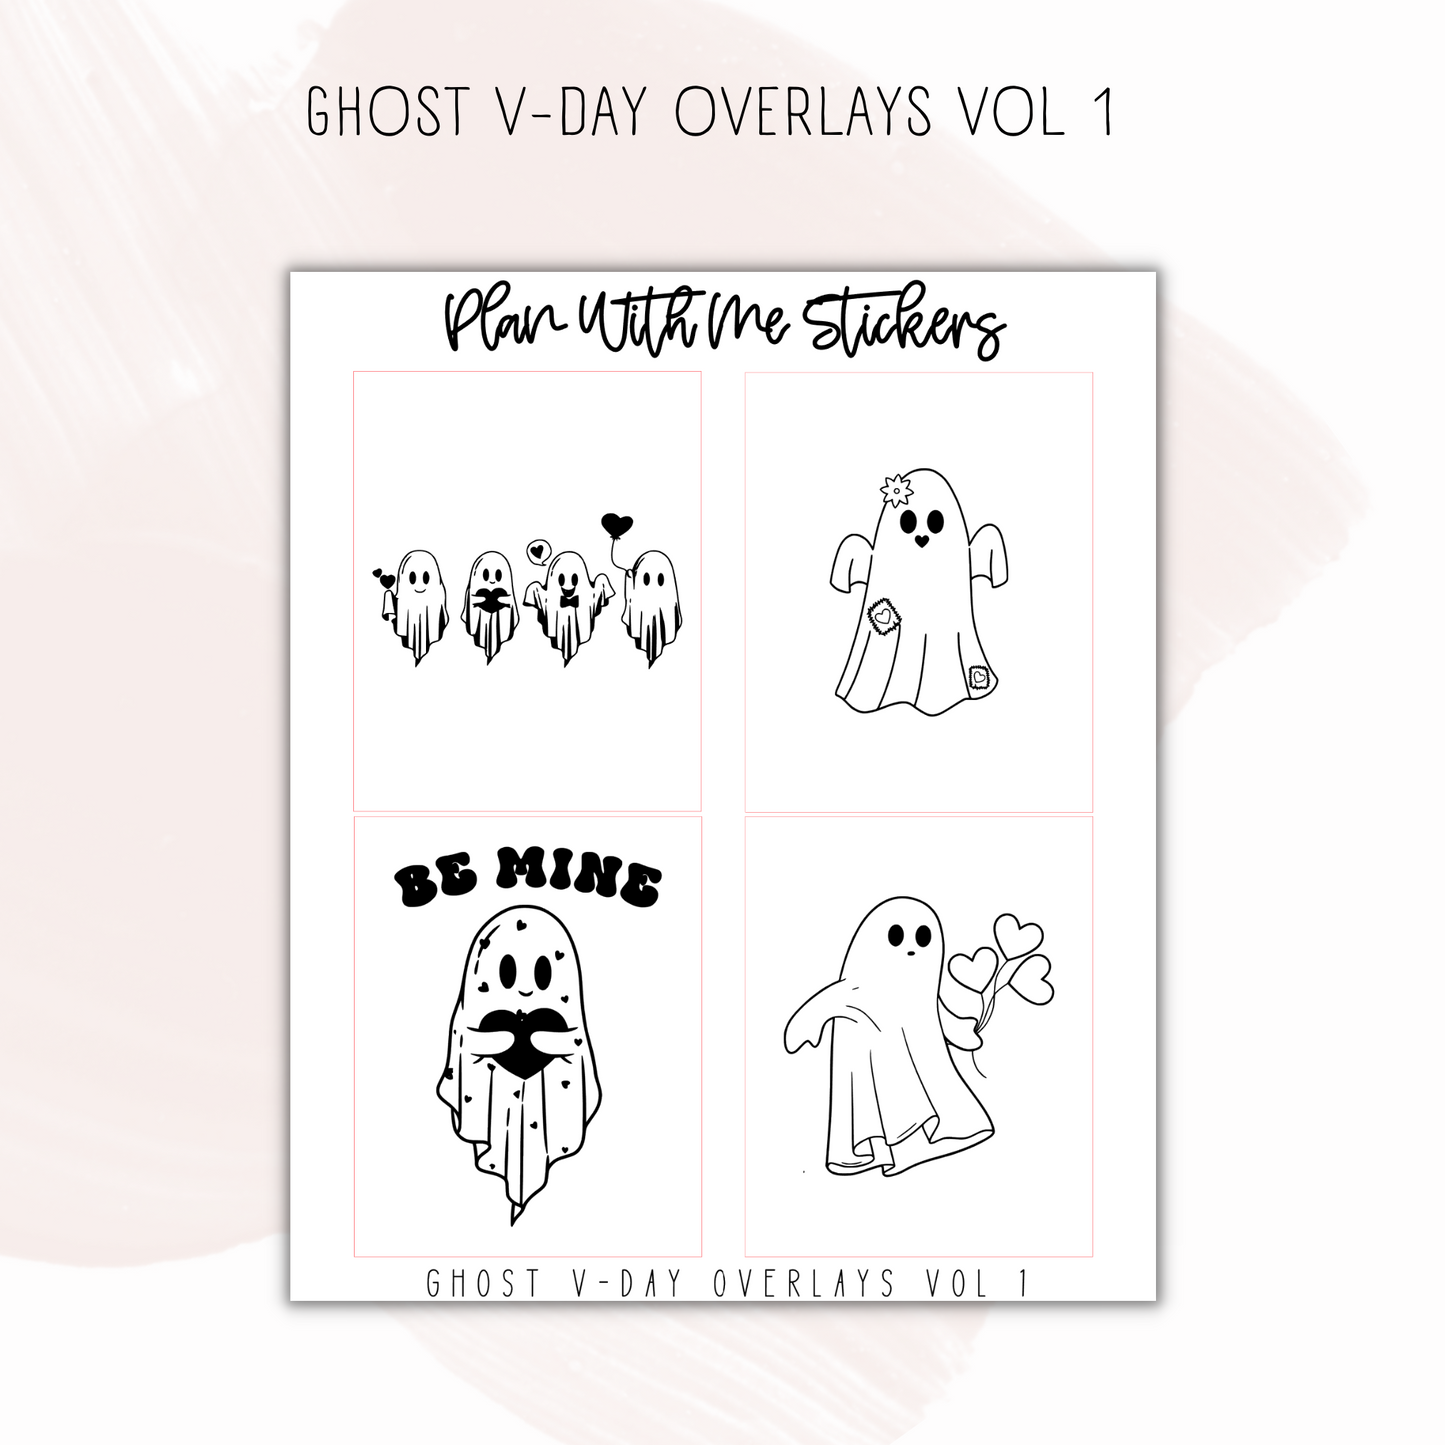 Ghost V-Day Overlays Vol 1